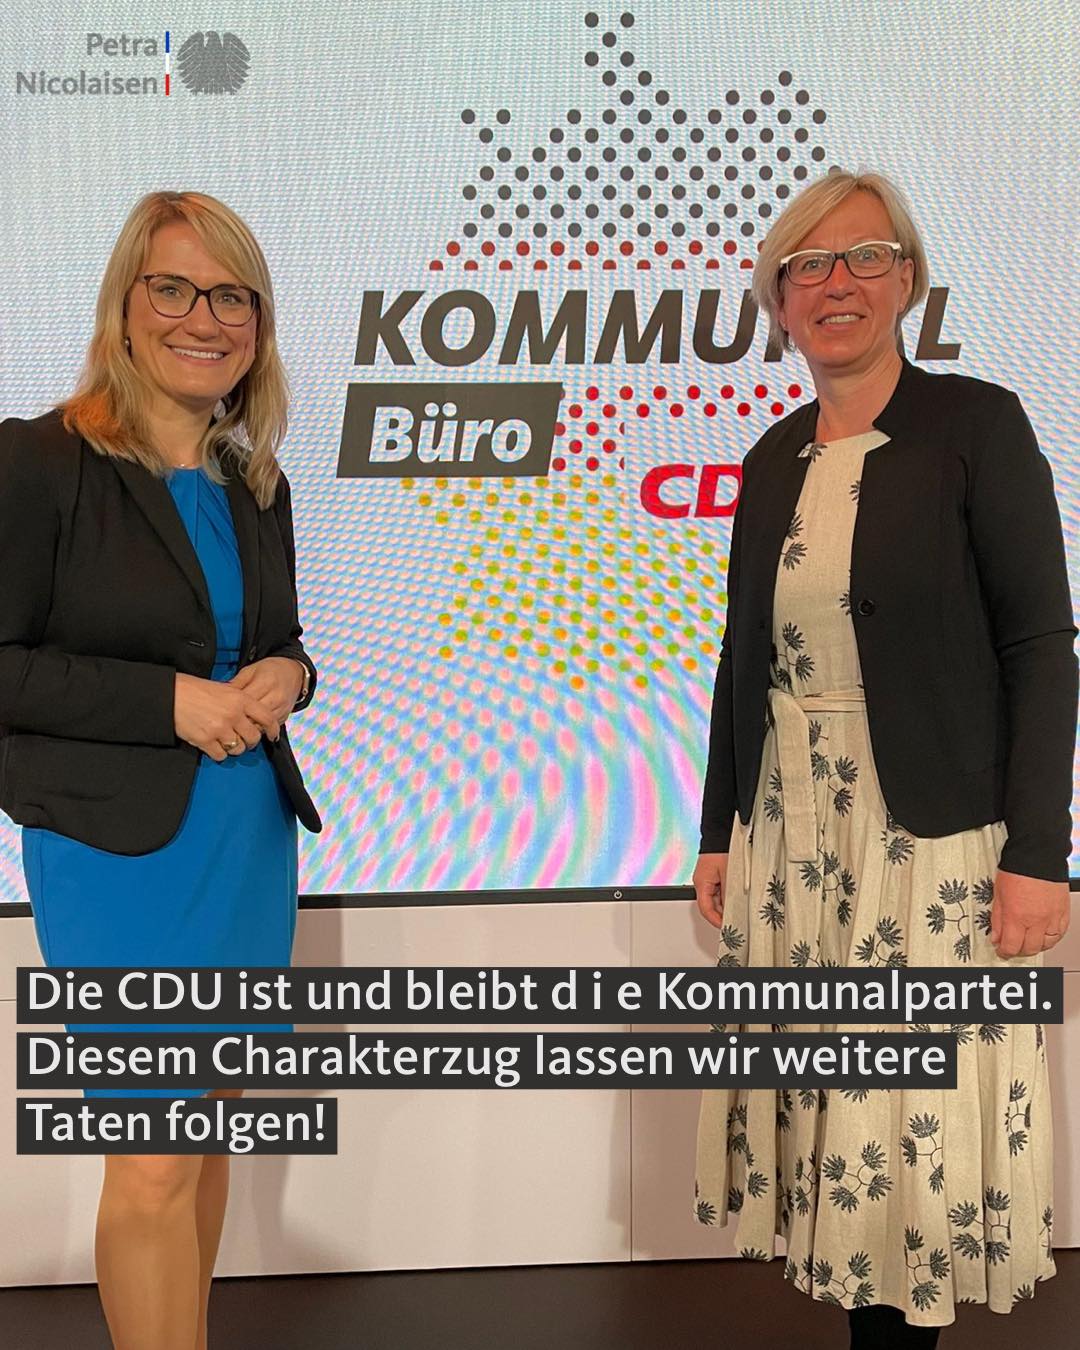 Eröffnung des CDU-Kommunalbüros im Konrad-Adenauer-Haus